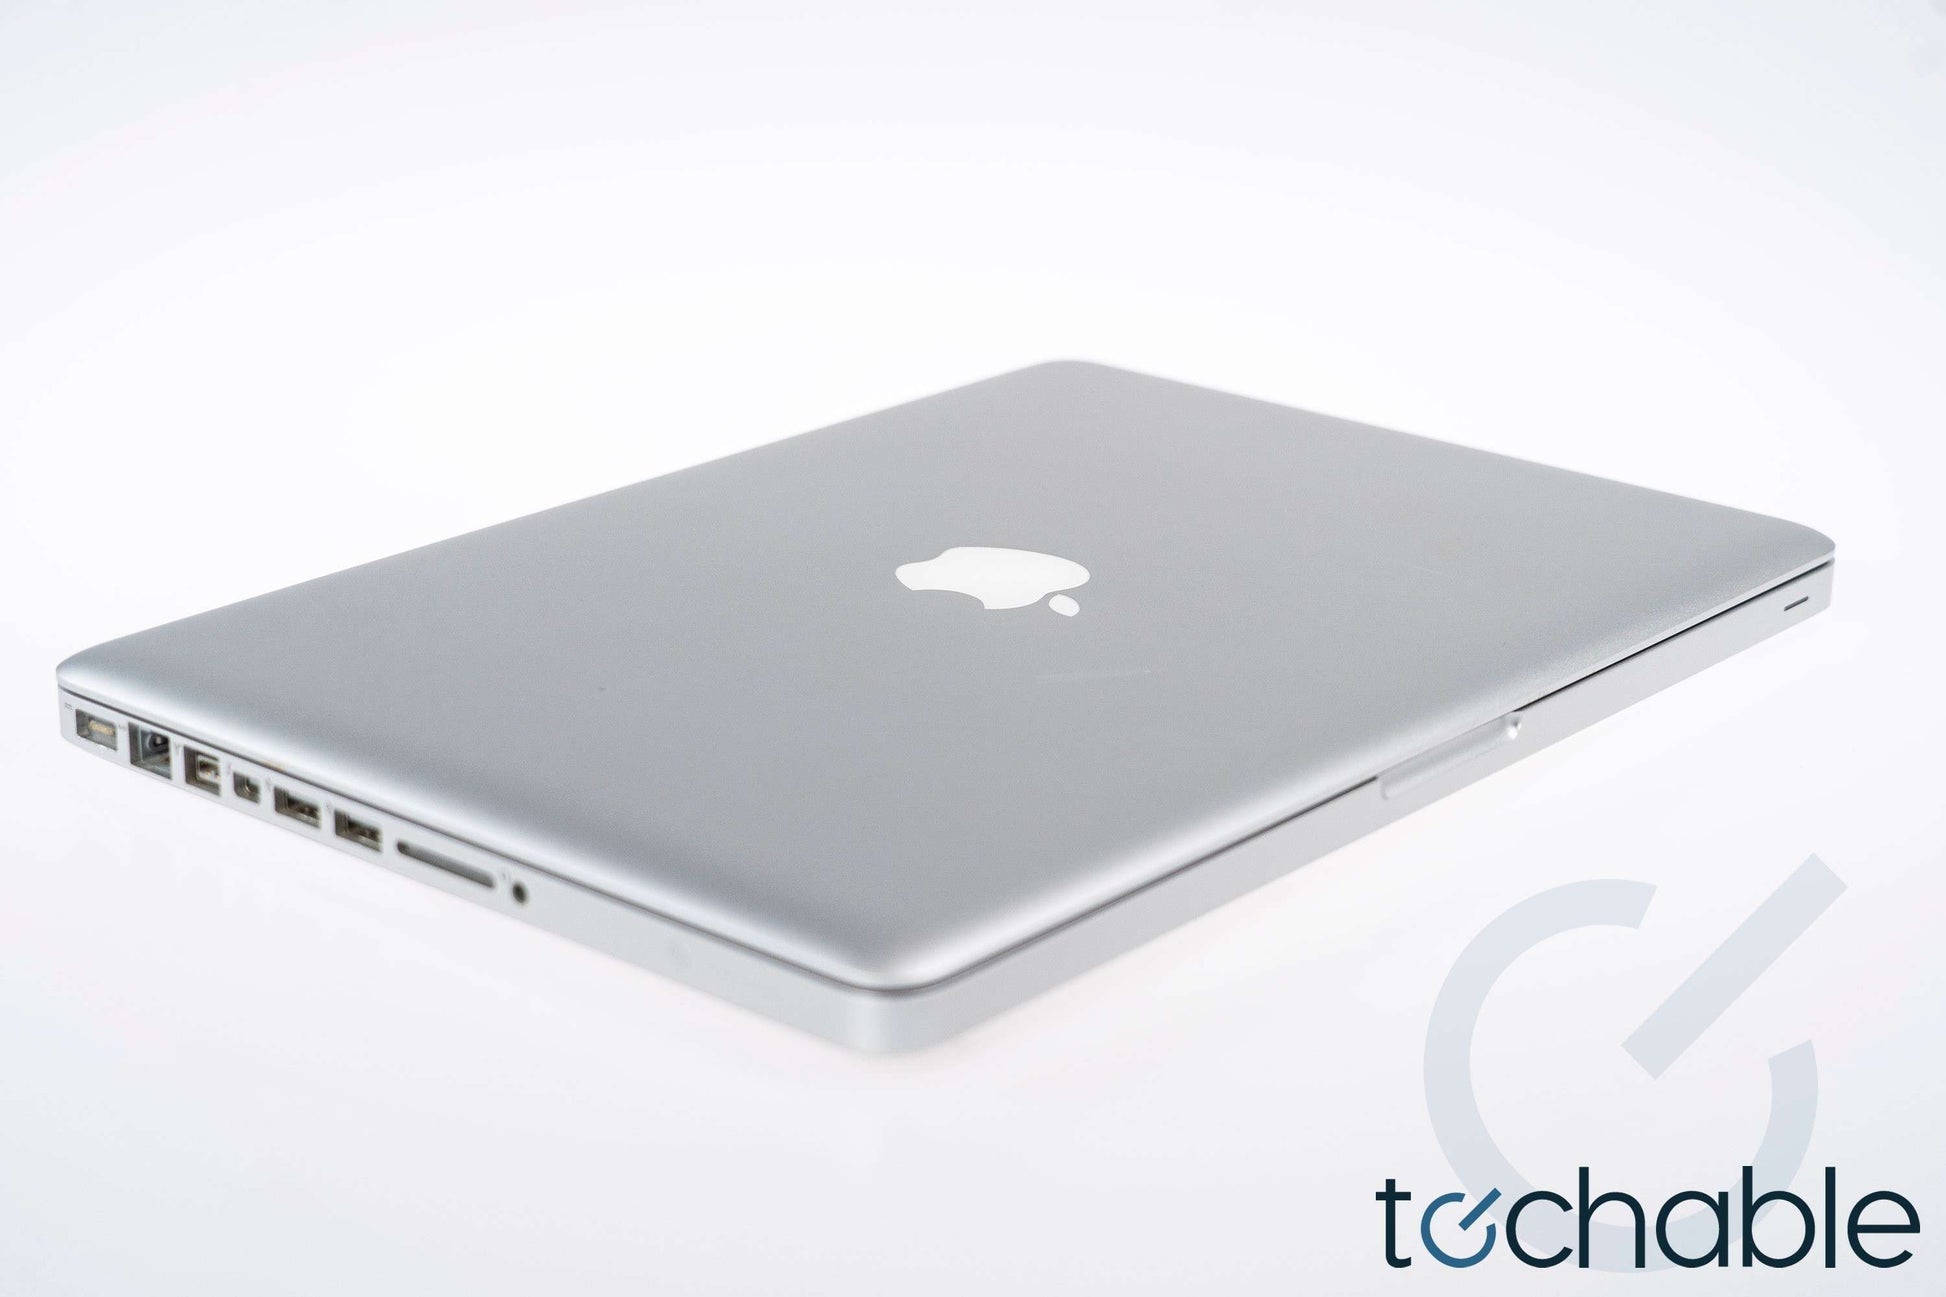 Apple Macbook Pro 13" 2.4GHz Core 2 Duo MC374LL/A